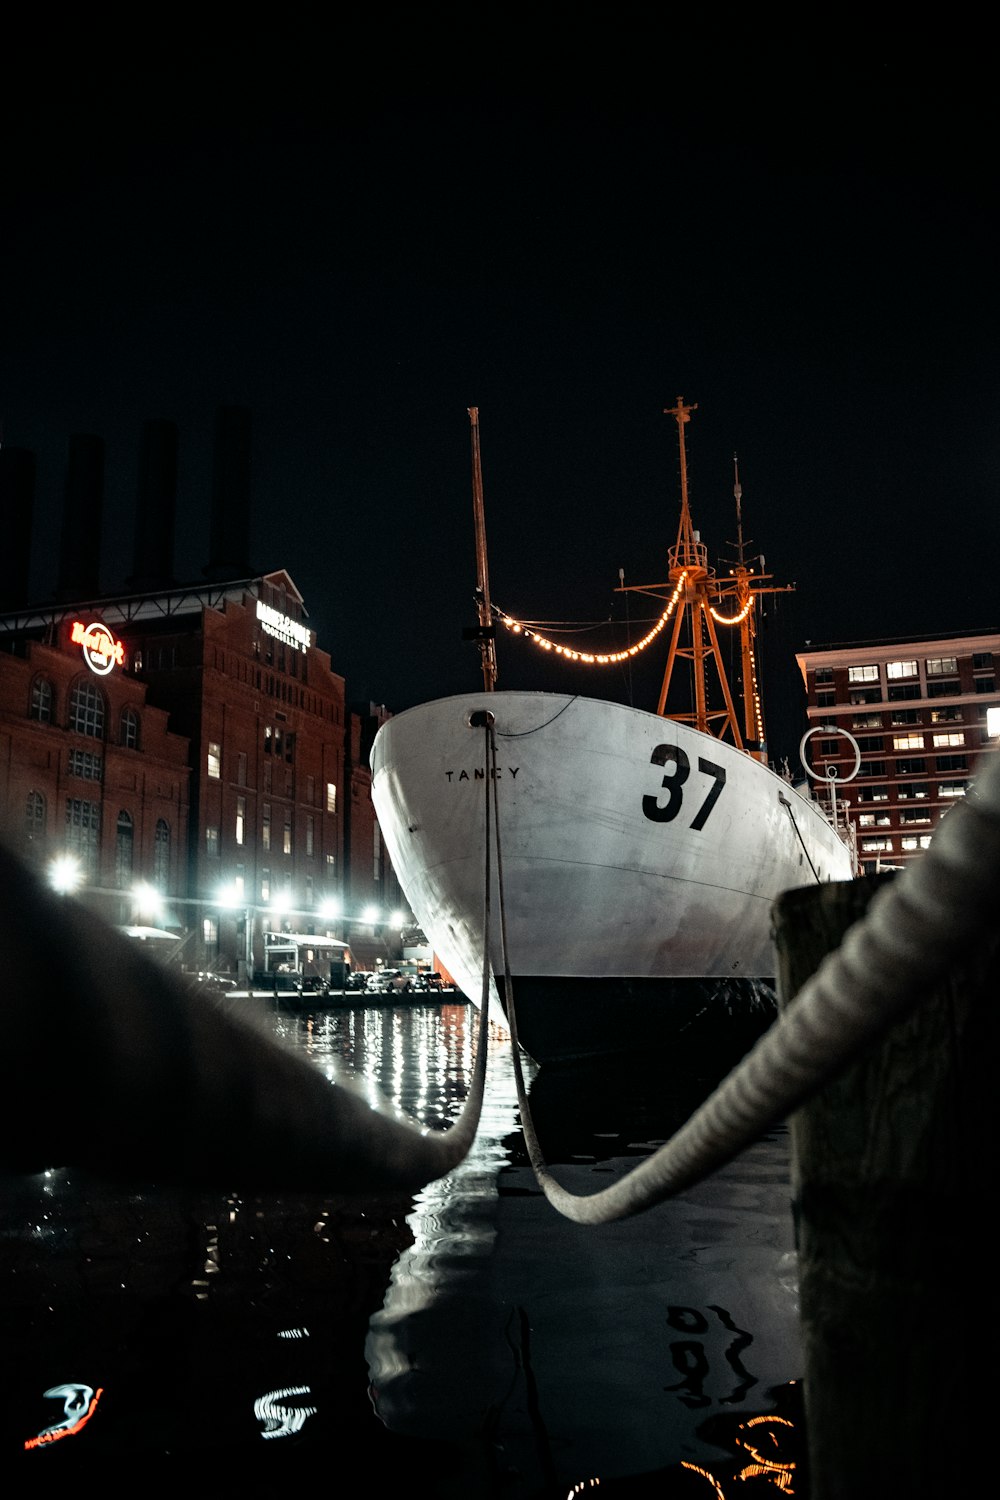 white ship on dock during night time